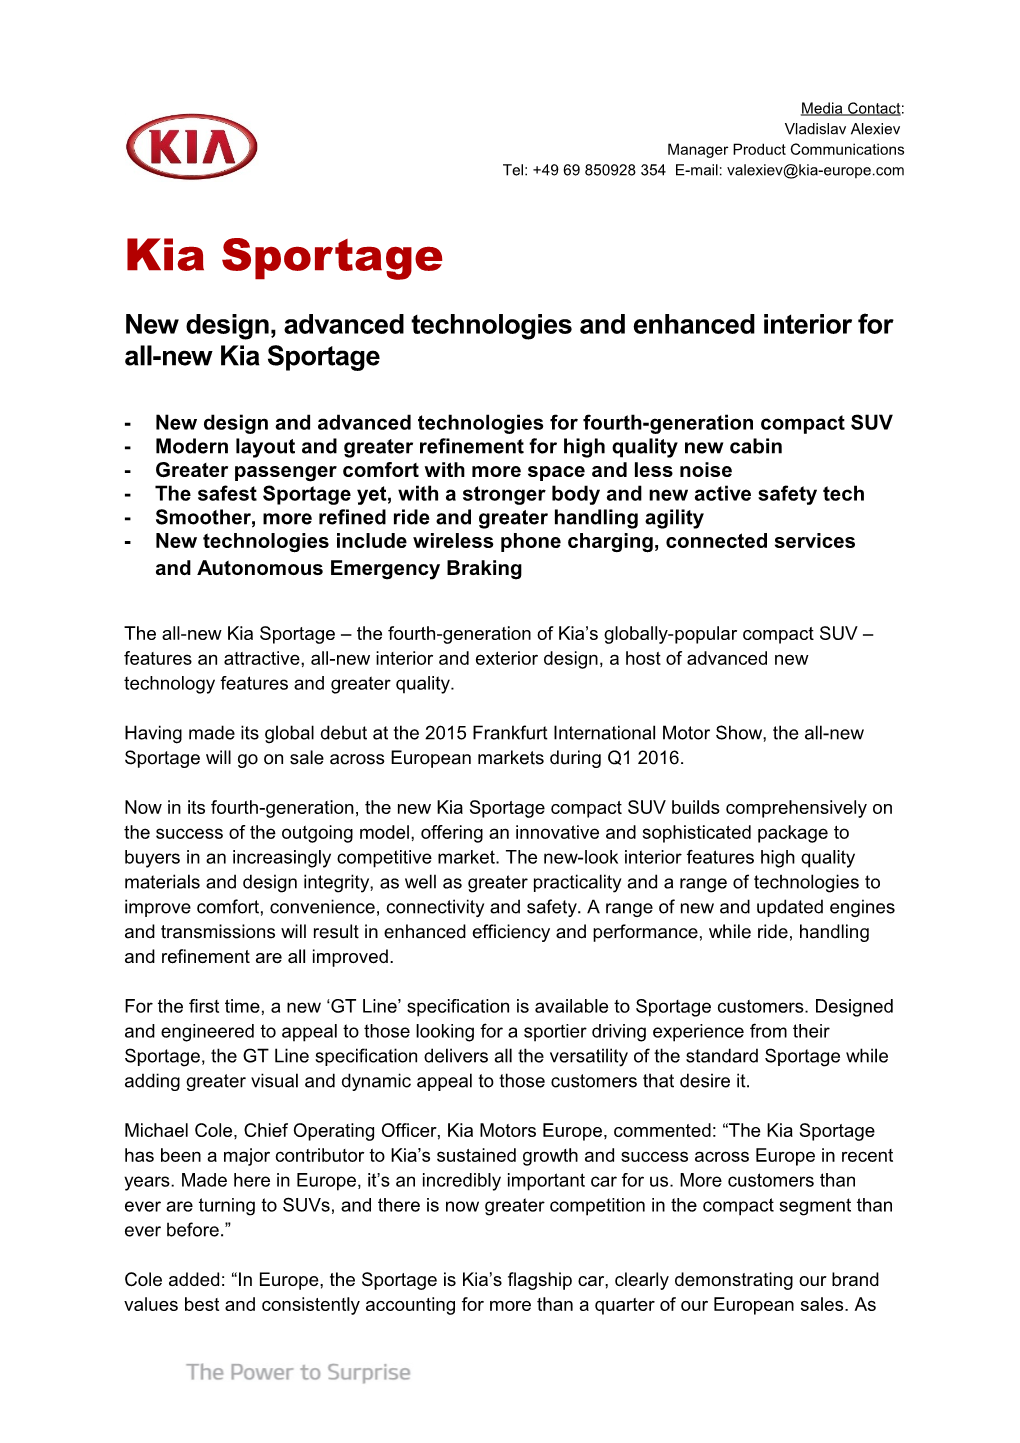 New Design, Advanced Technologies and Enhanced Interior for All-New Kia Sportage